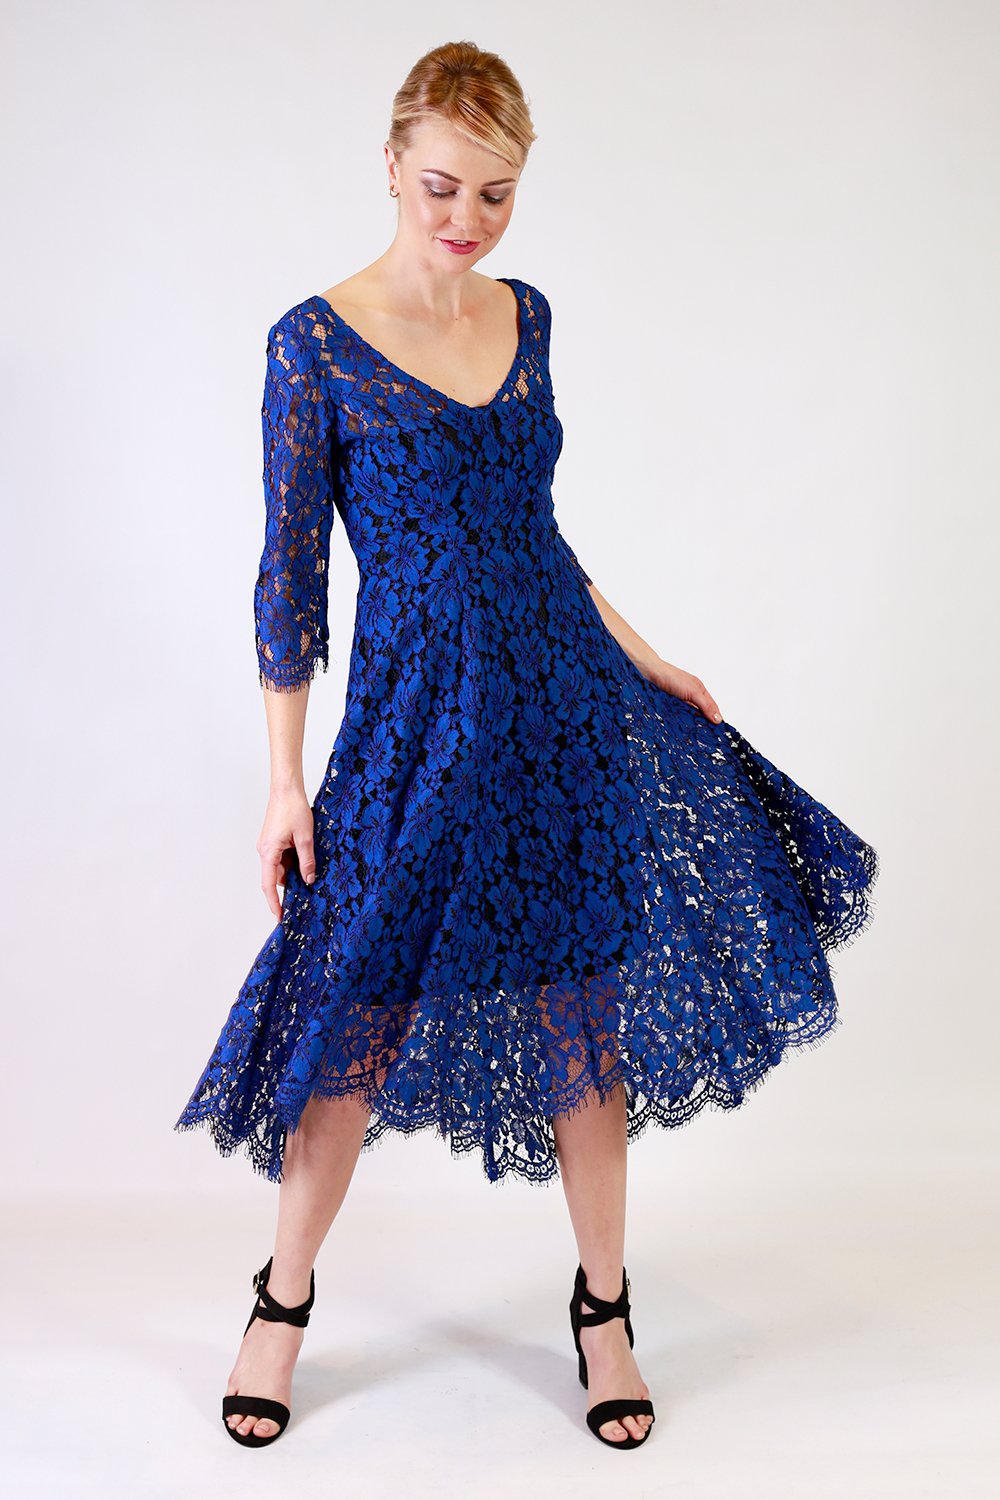 Summer Dress - Royal Blue